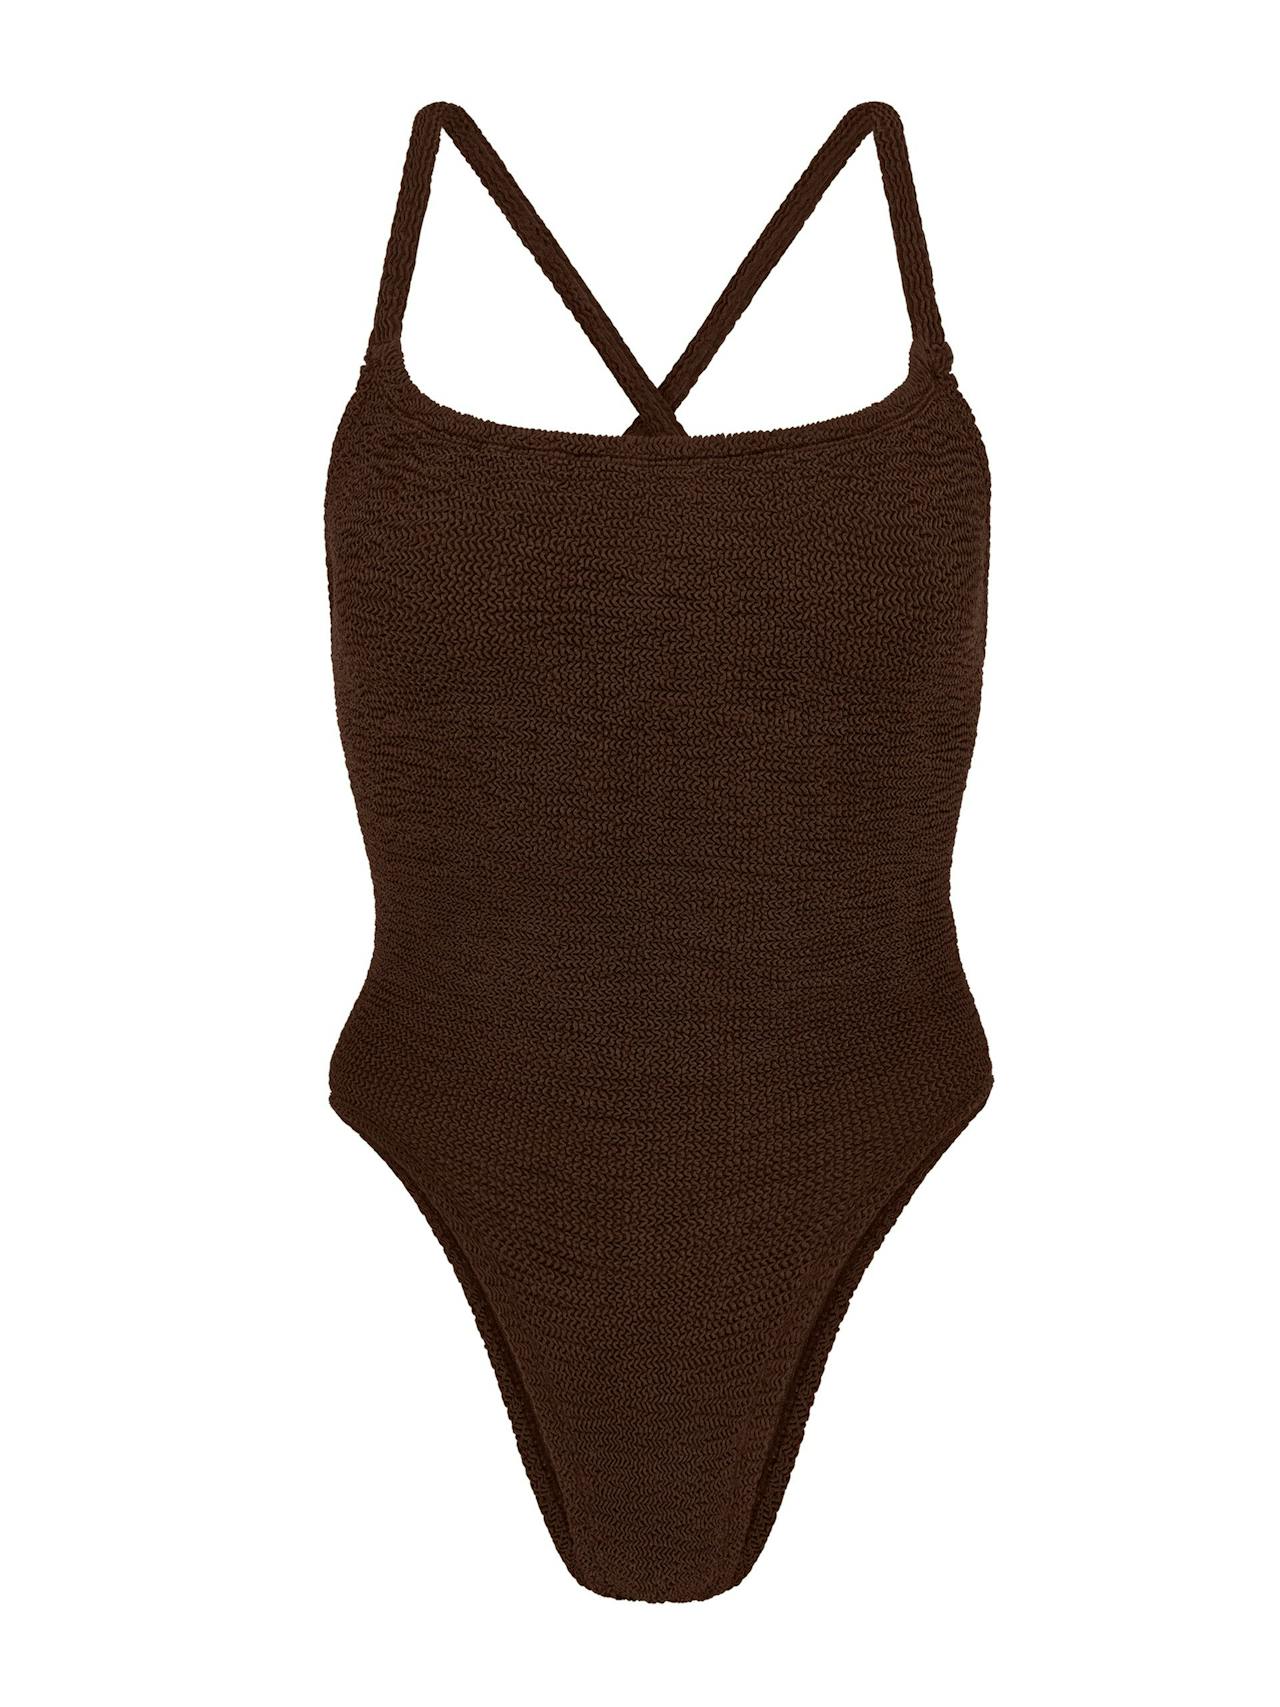 Mattalic chocolate Bette swimsuit